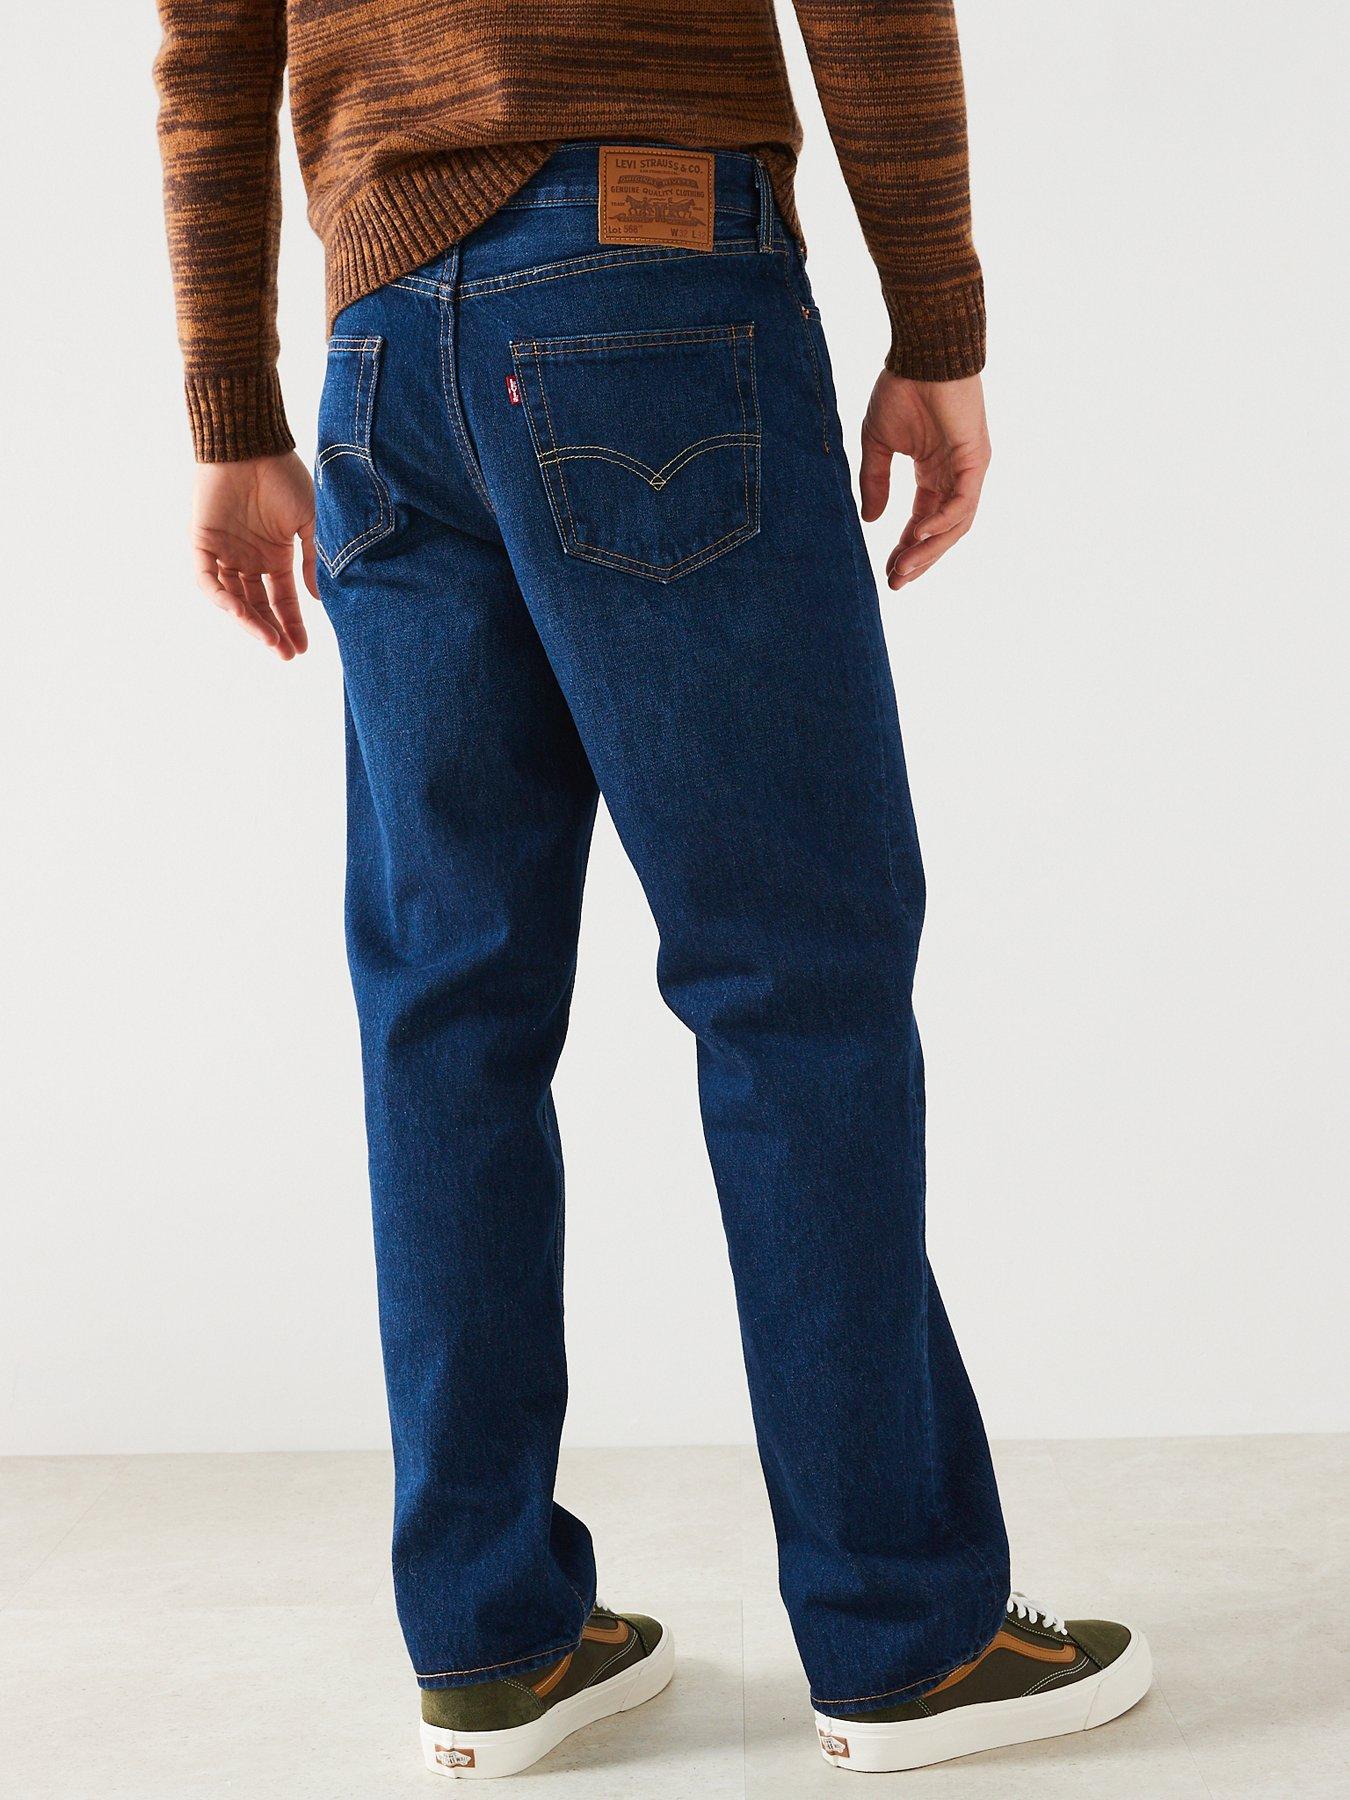 Levi's 568 Stay Loose Fit Jeans - Vivid Dreams - Dark Blue